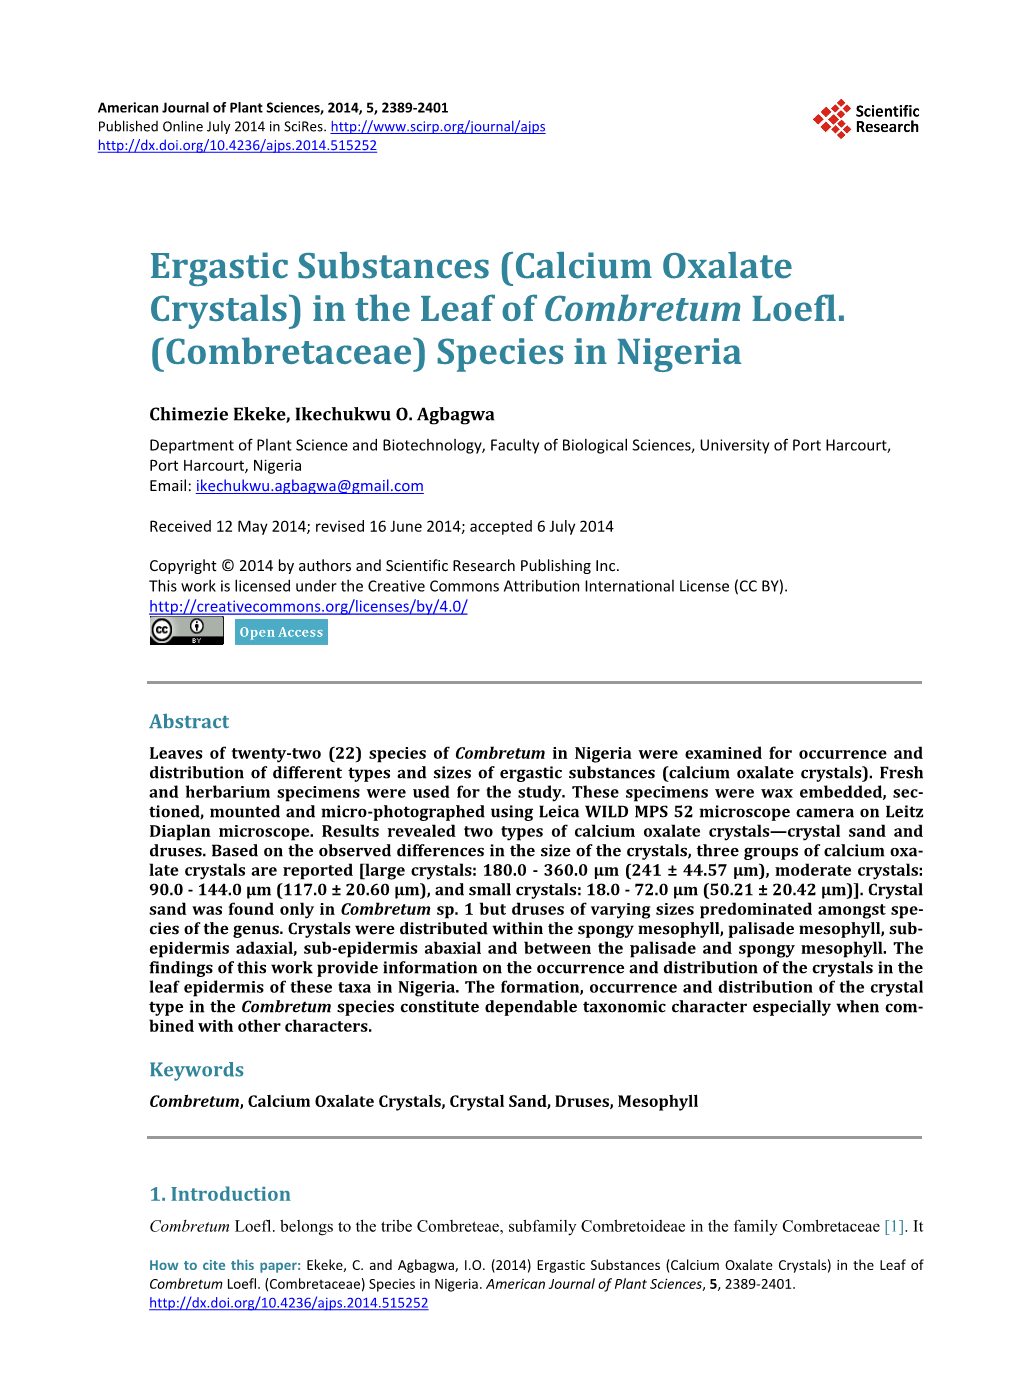 Ergastic Substances (Calcium Oxalate Crystals) in the Leaf of Combretum Loefl